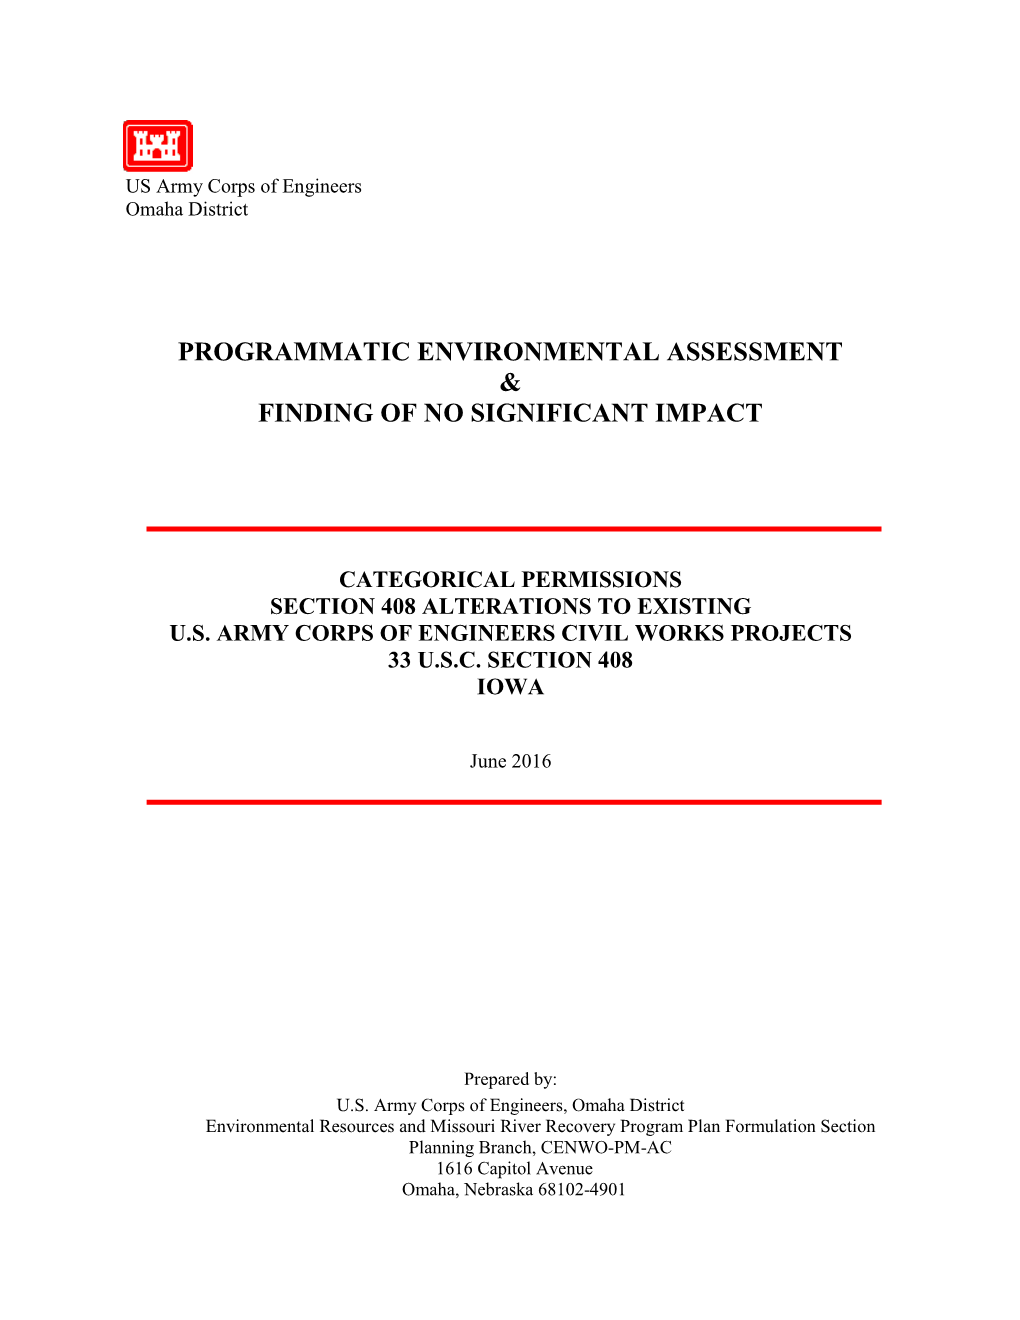 Programmatic Environmental Assessment & Finding of No